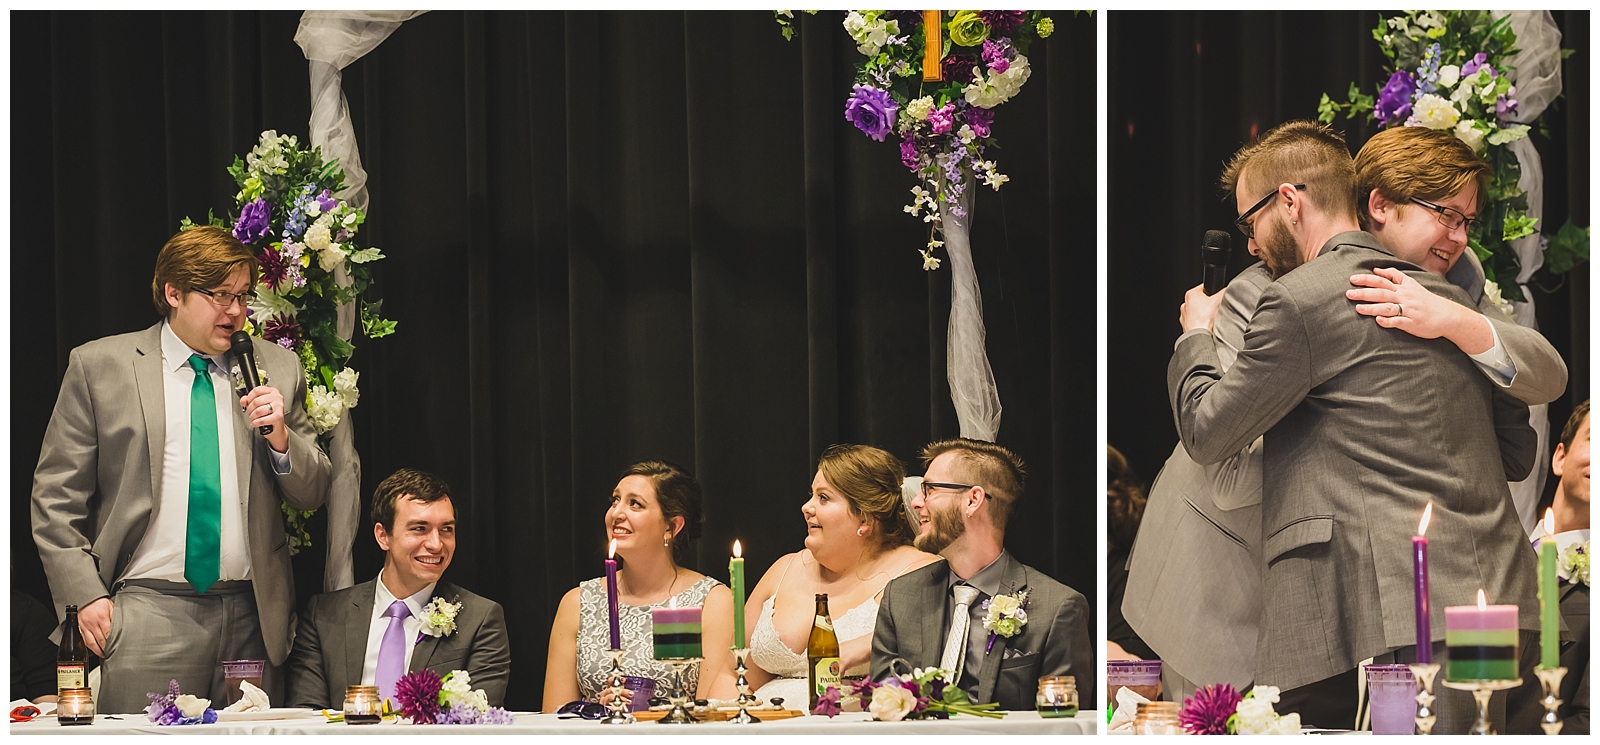 Wedding photography at Drexel Hall by Kansas City wedding photographers Wisdom-Watson Weddings.